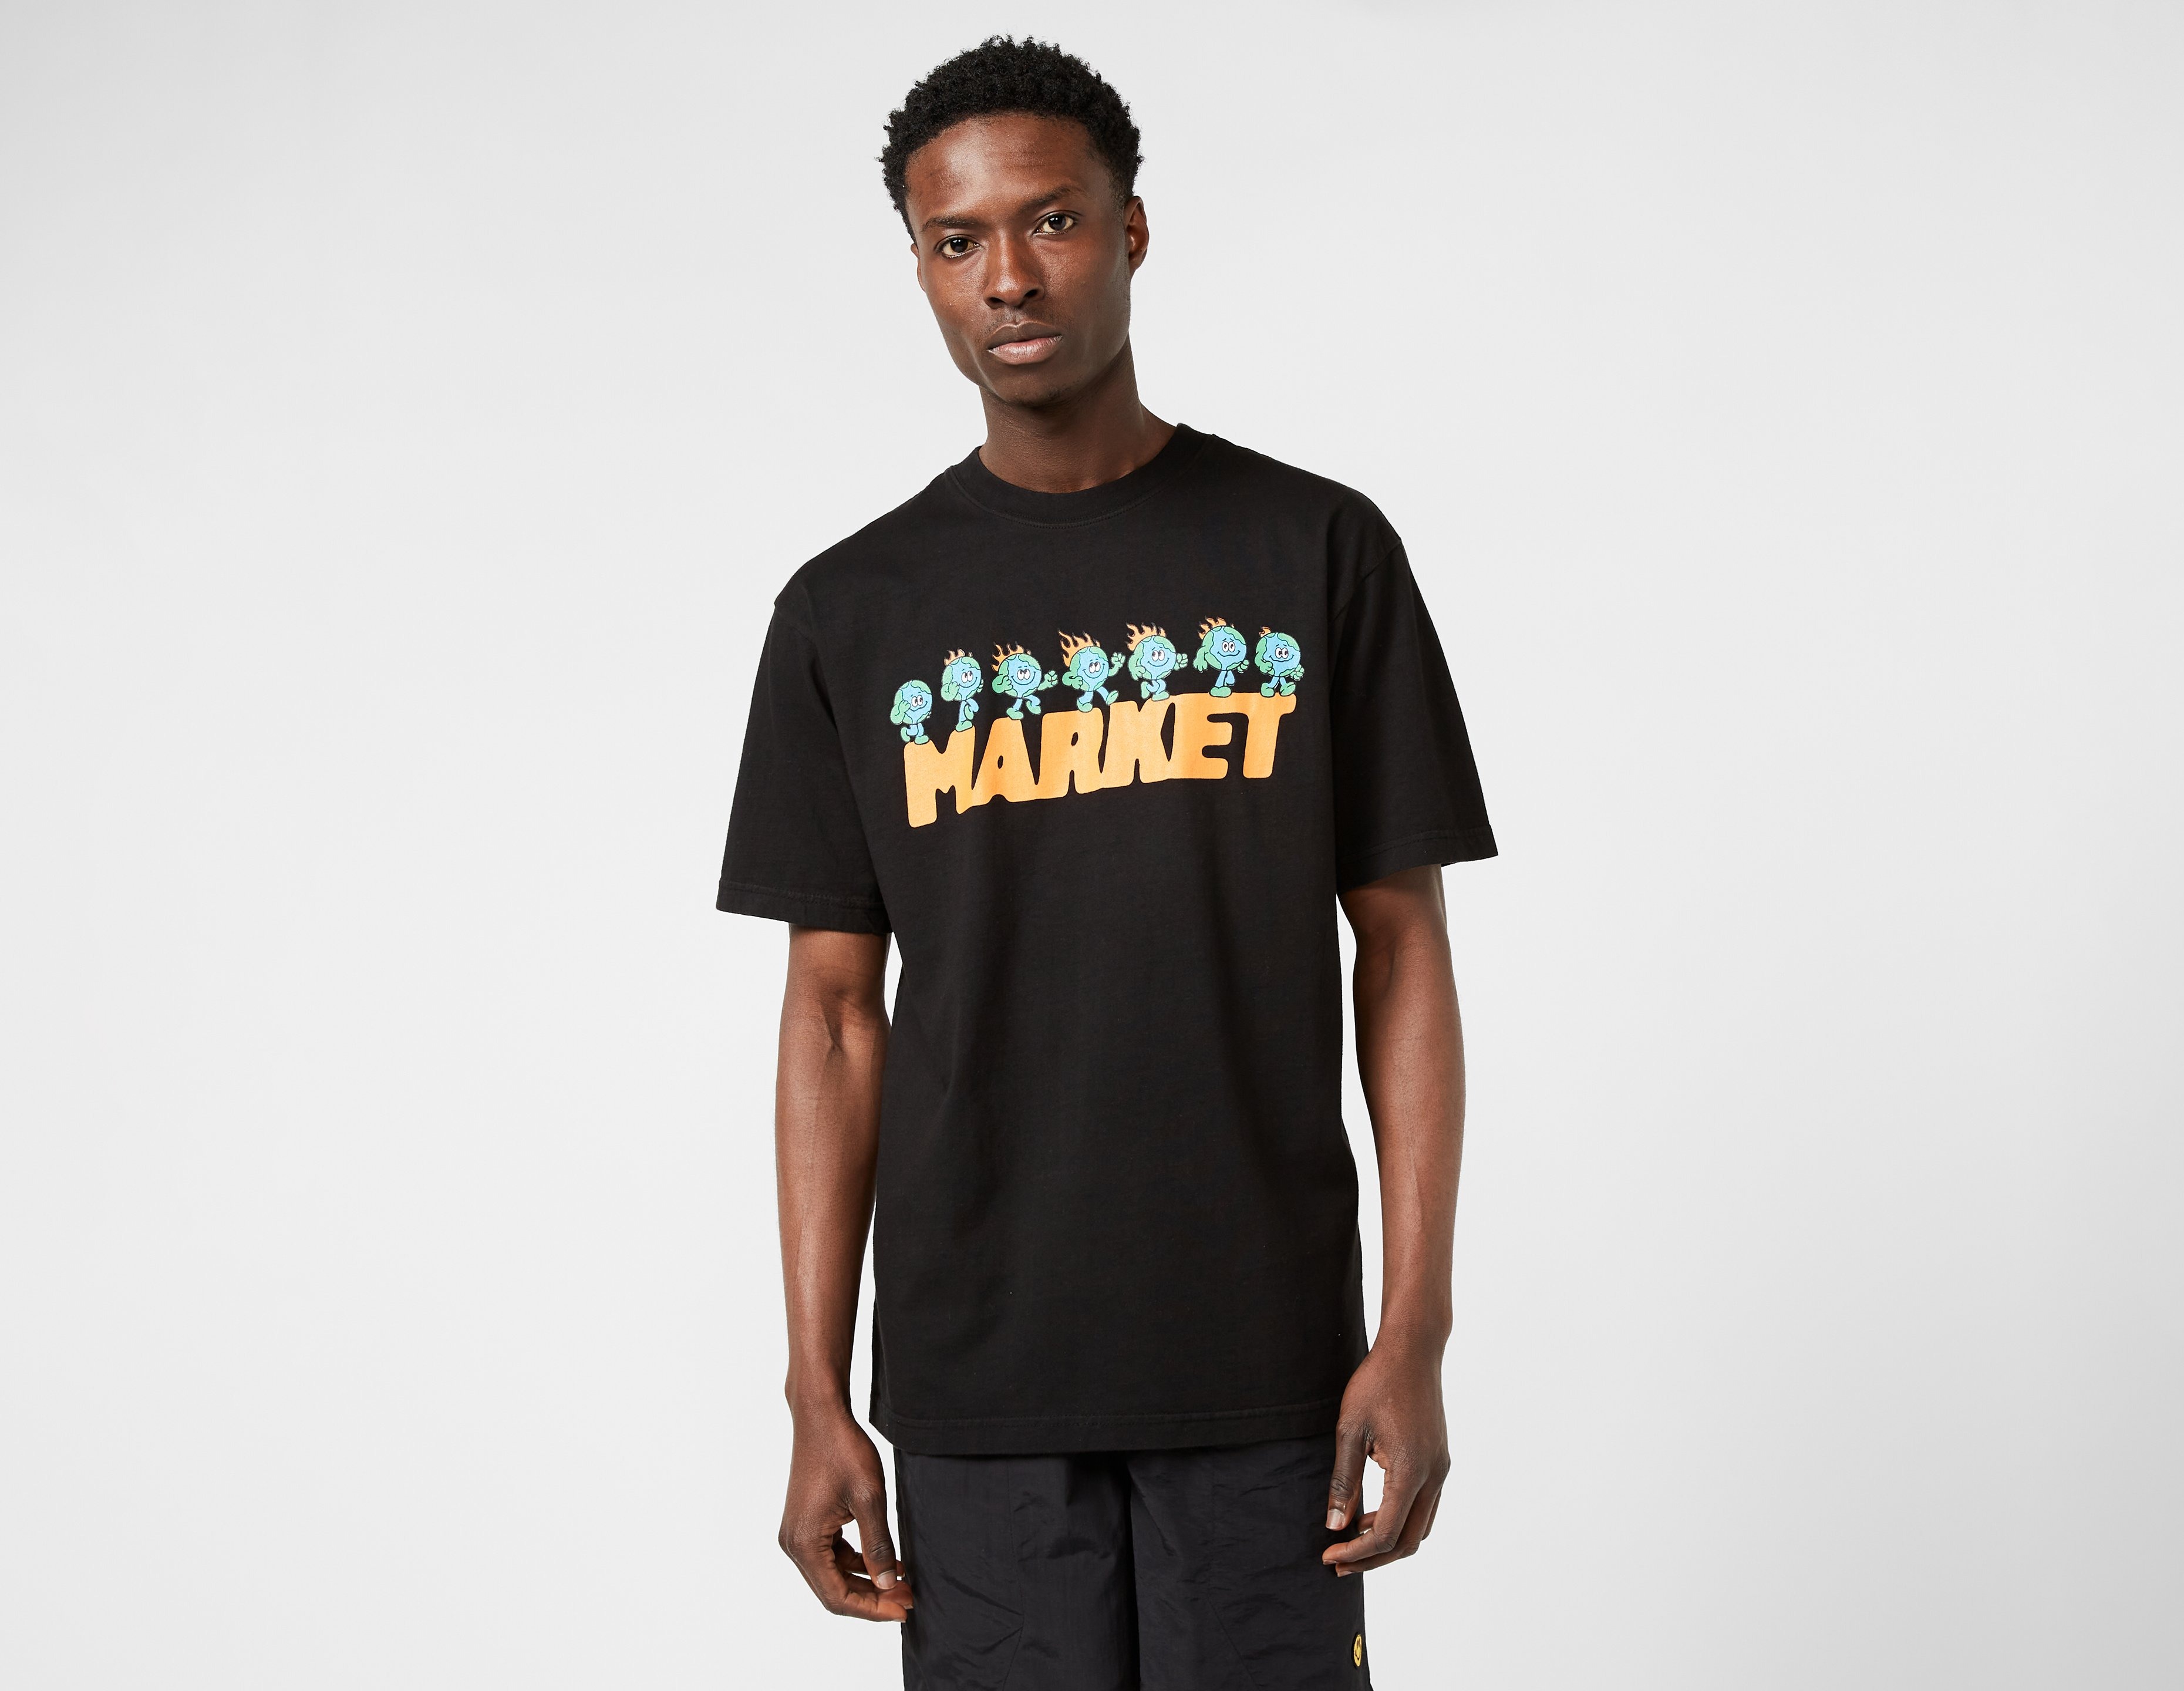 Black MARKET Keep Going T-Shirt | size?